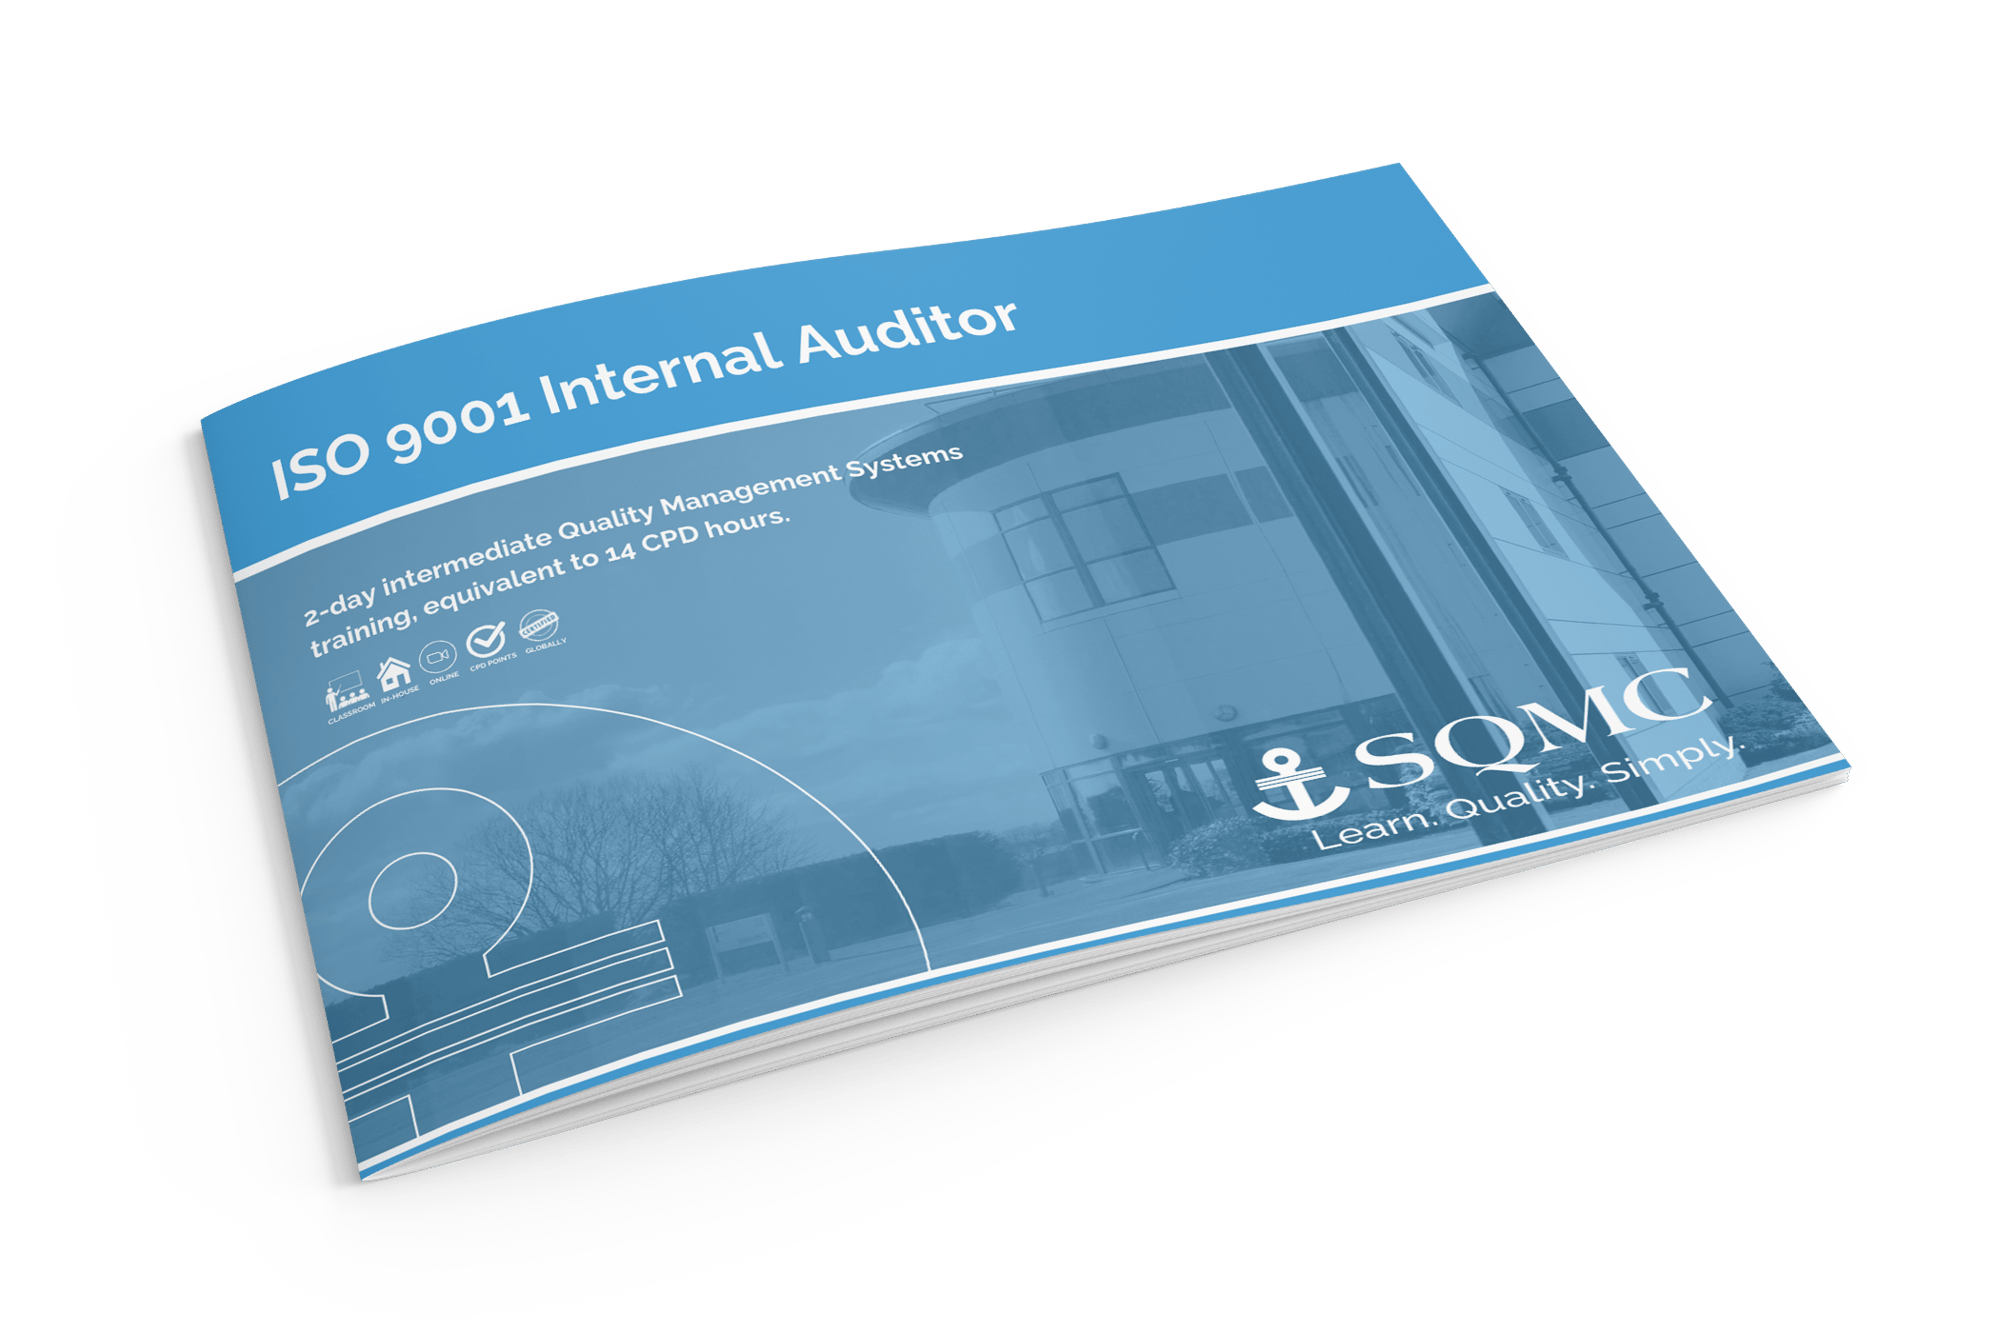 iso-9001-internal-auditor-syllabus